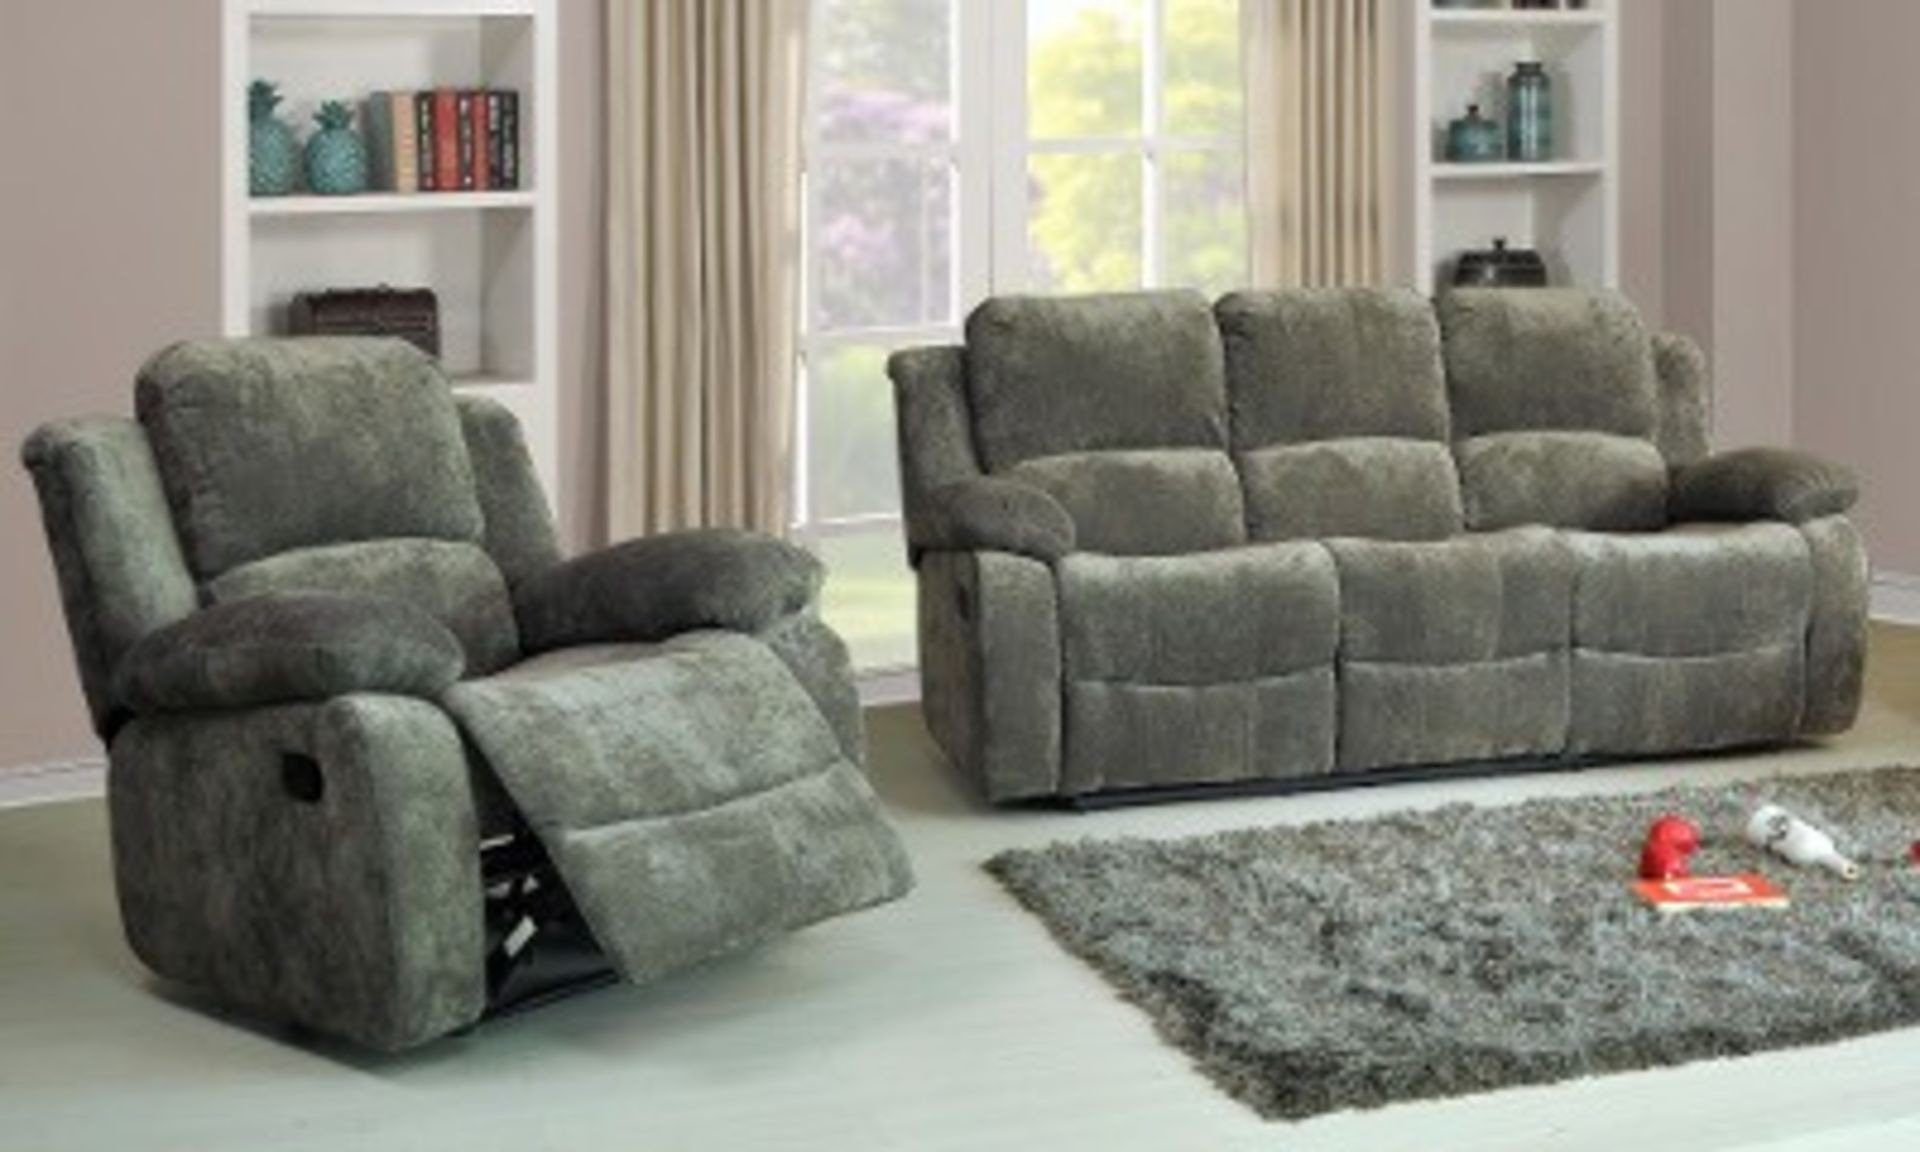 Supreme Valance dark grey fabric 3 seater electric reclining sofa